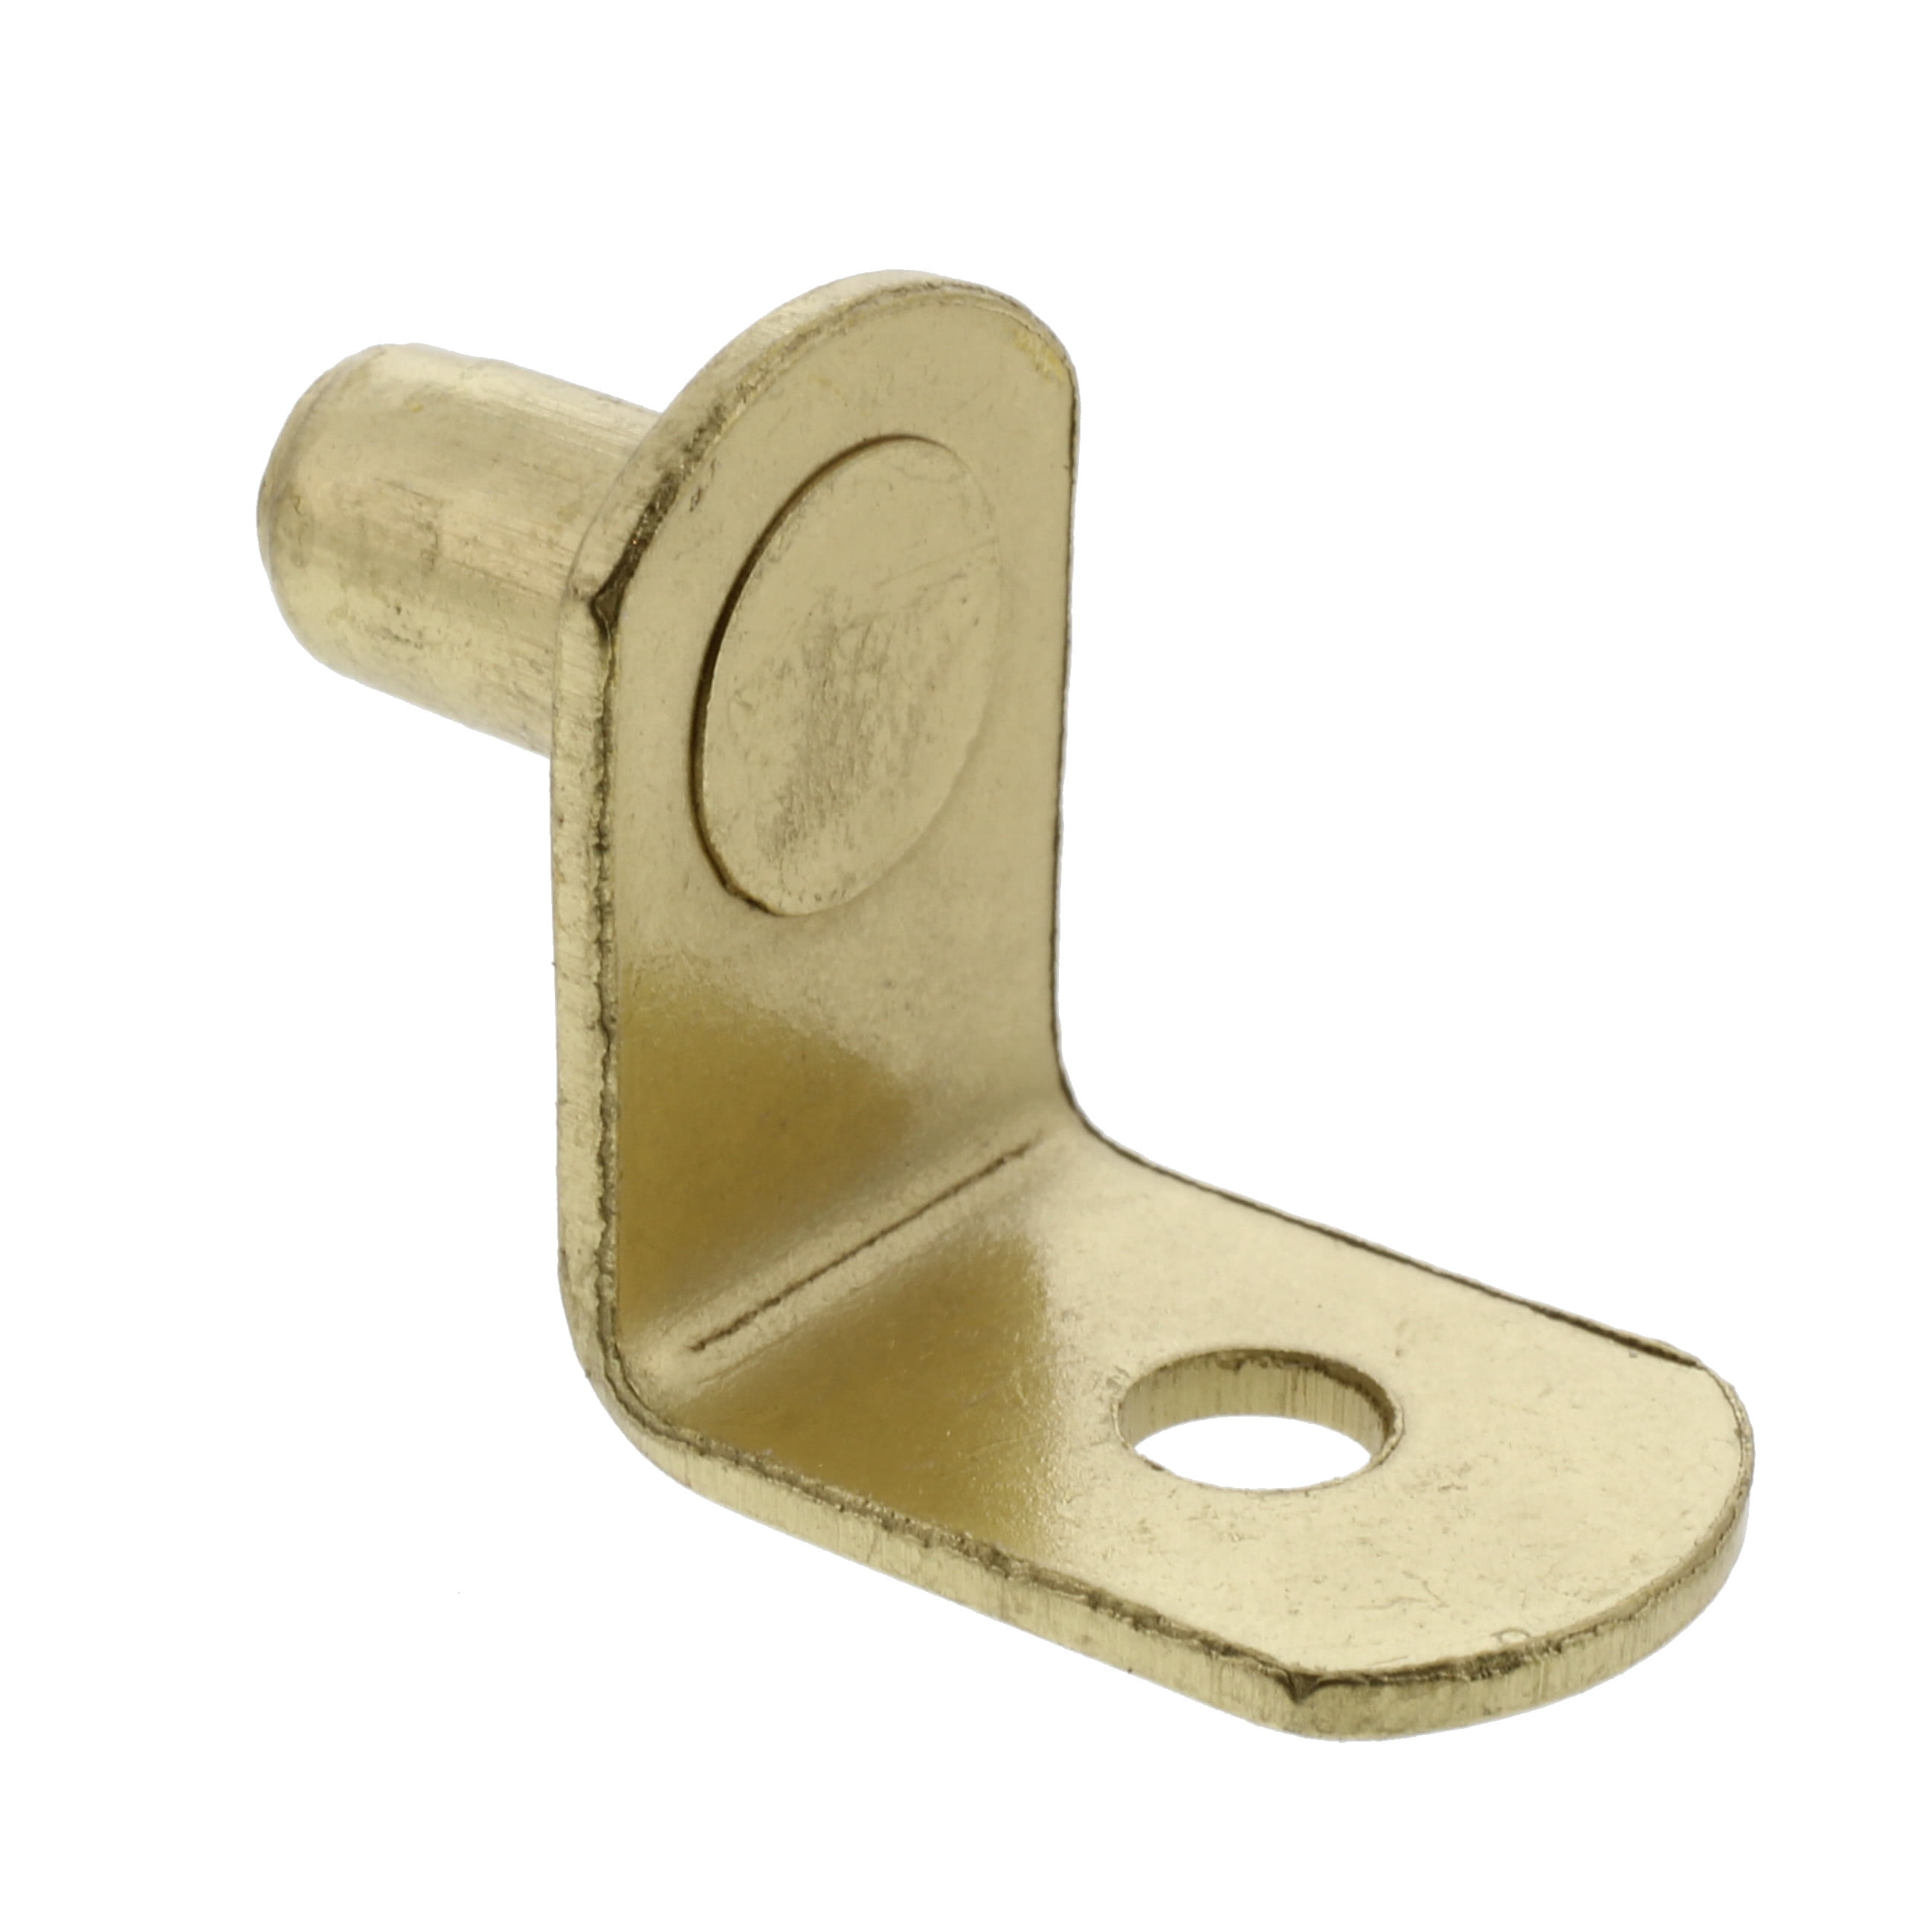 Shelf Pin Spoon Shaped Cabinet Support Pegs Holder Metal 3mm Nickel Finish Rok Hardware Heavy Duty 1/8 100 Pack 